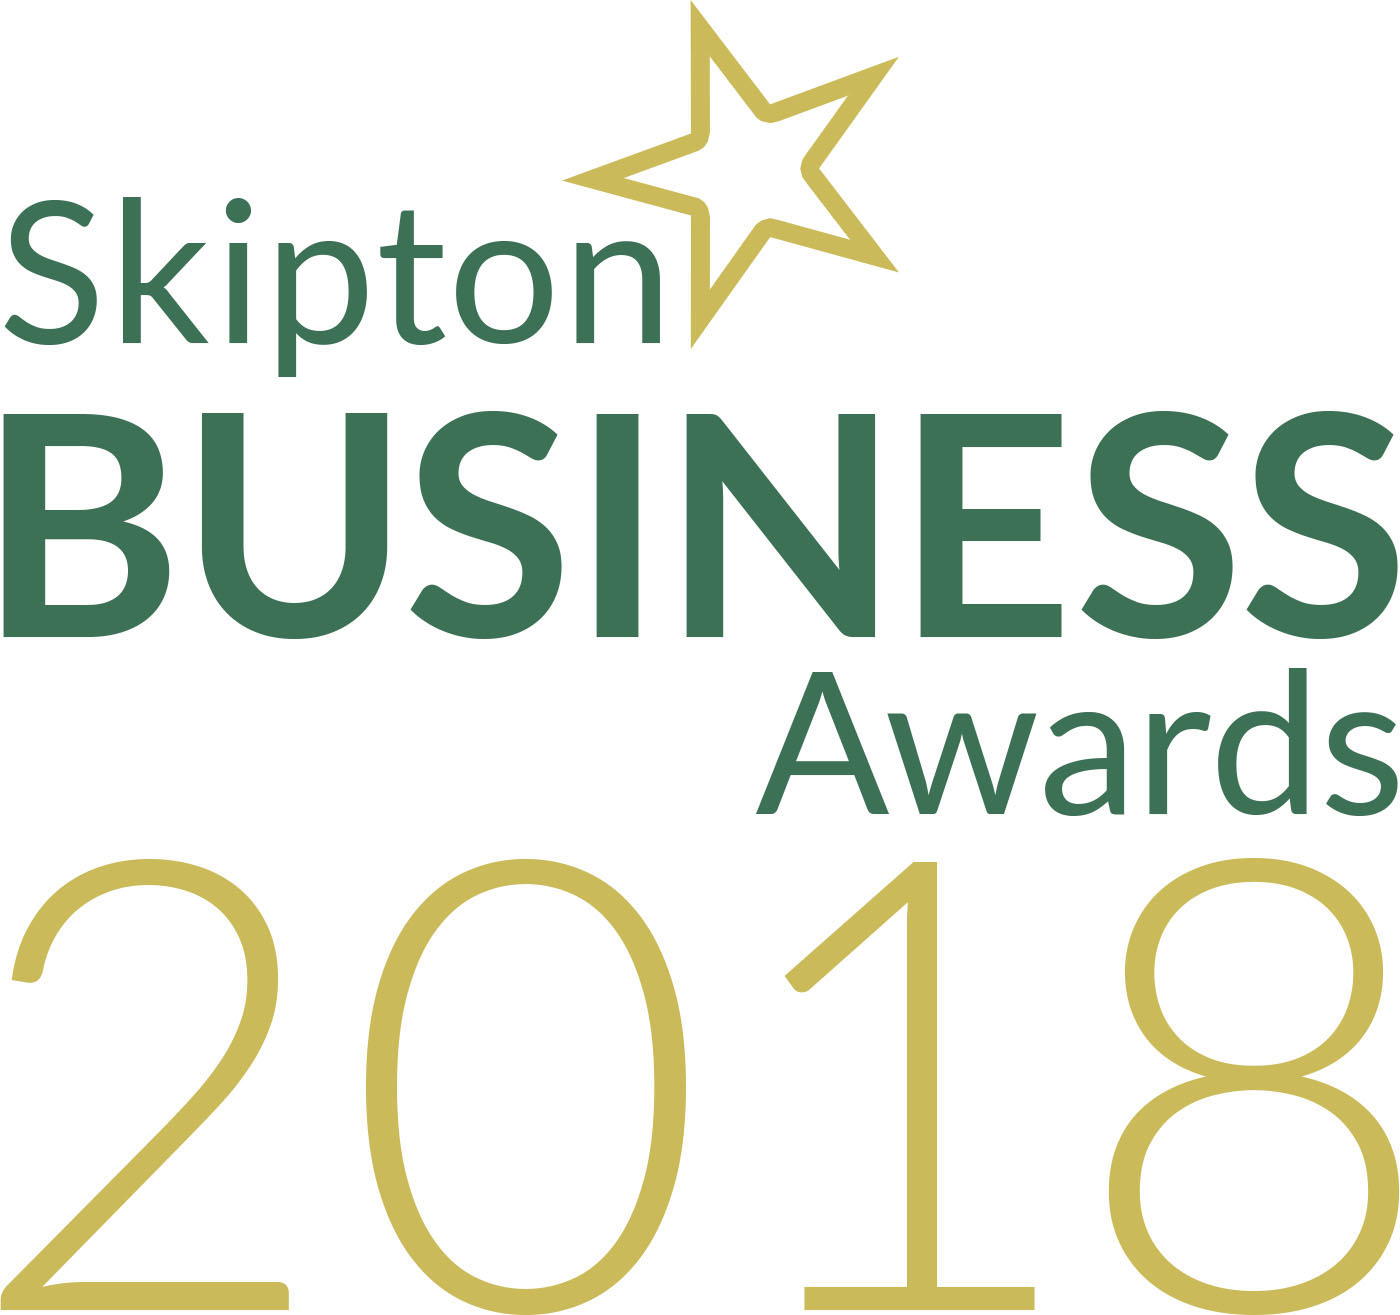 Skipton Business Awards 2018 logo